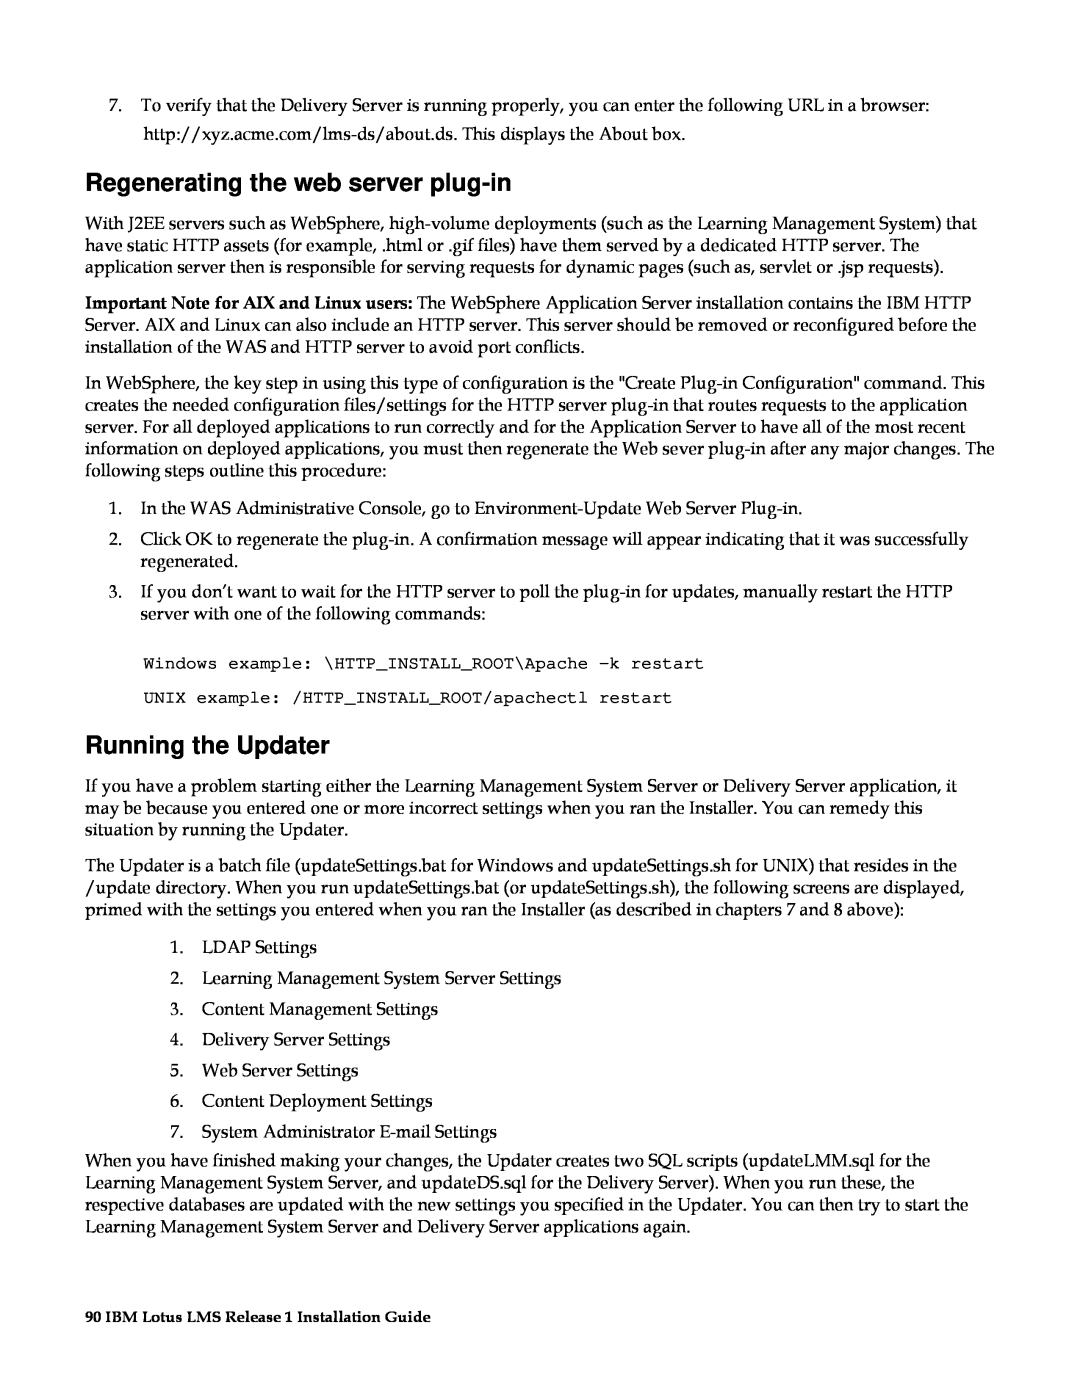 IBM G210-1784-00 Regenerating the web server plug-in, Running the Updater, UNIX example /HTTPINSTALLROOT/apachectl restart 